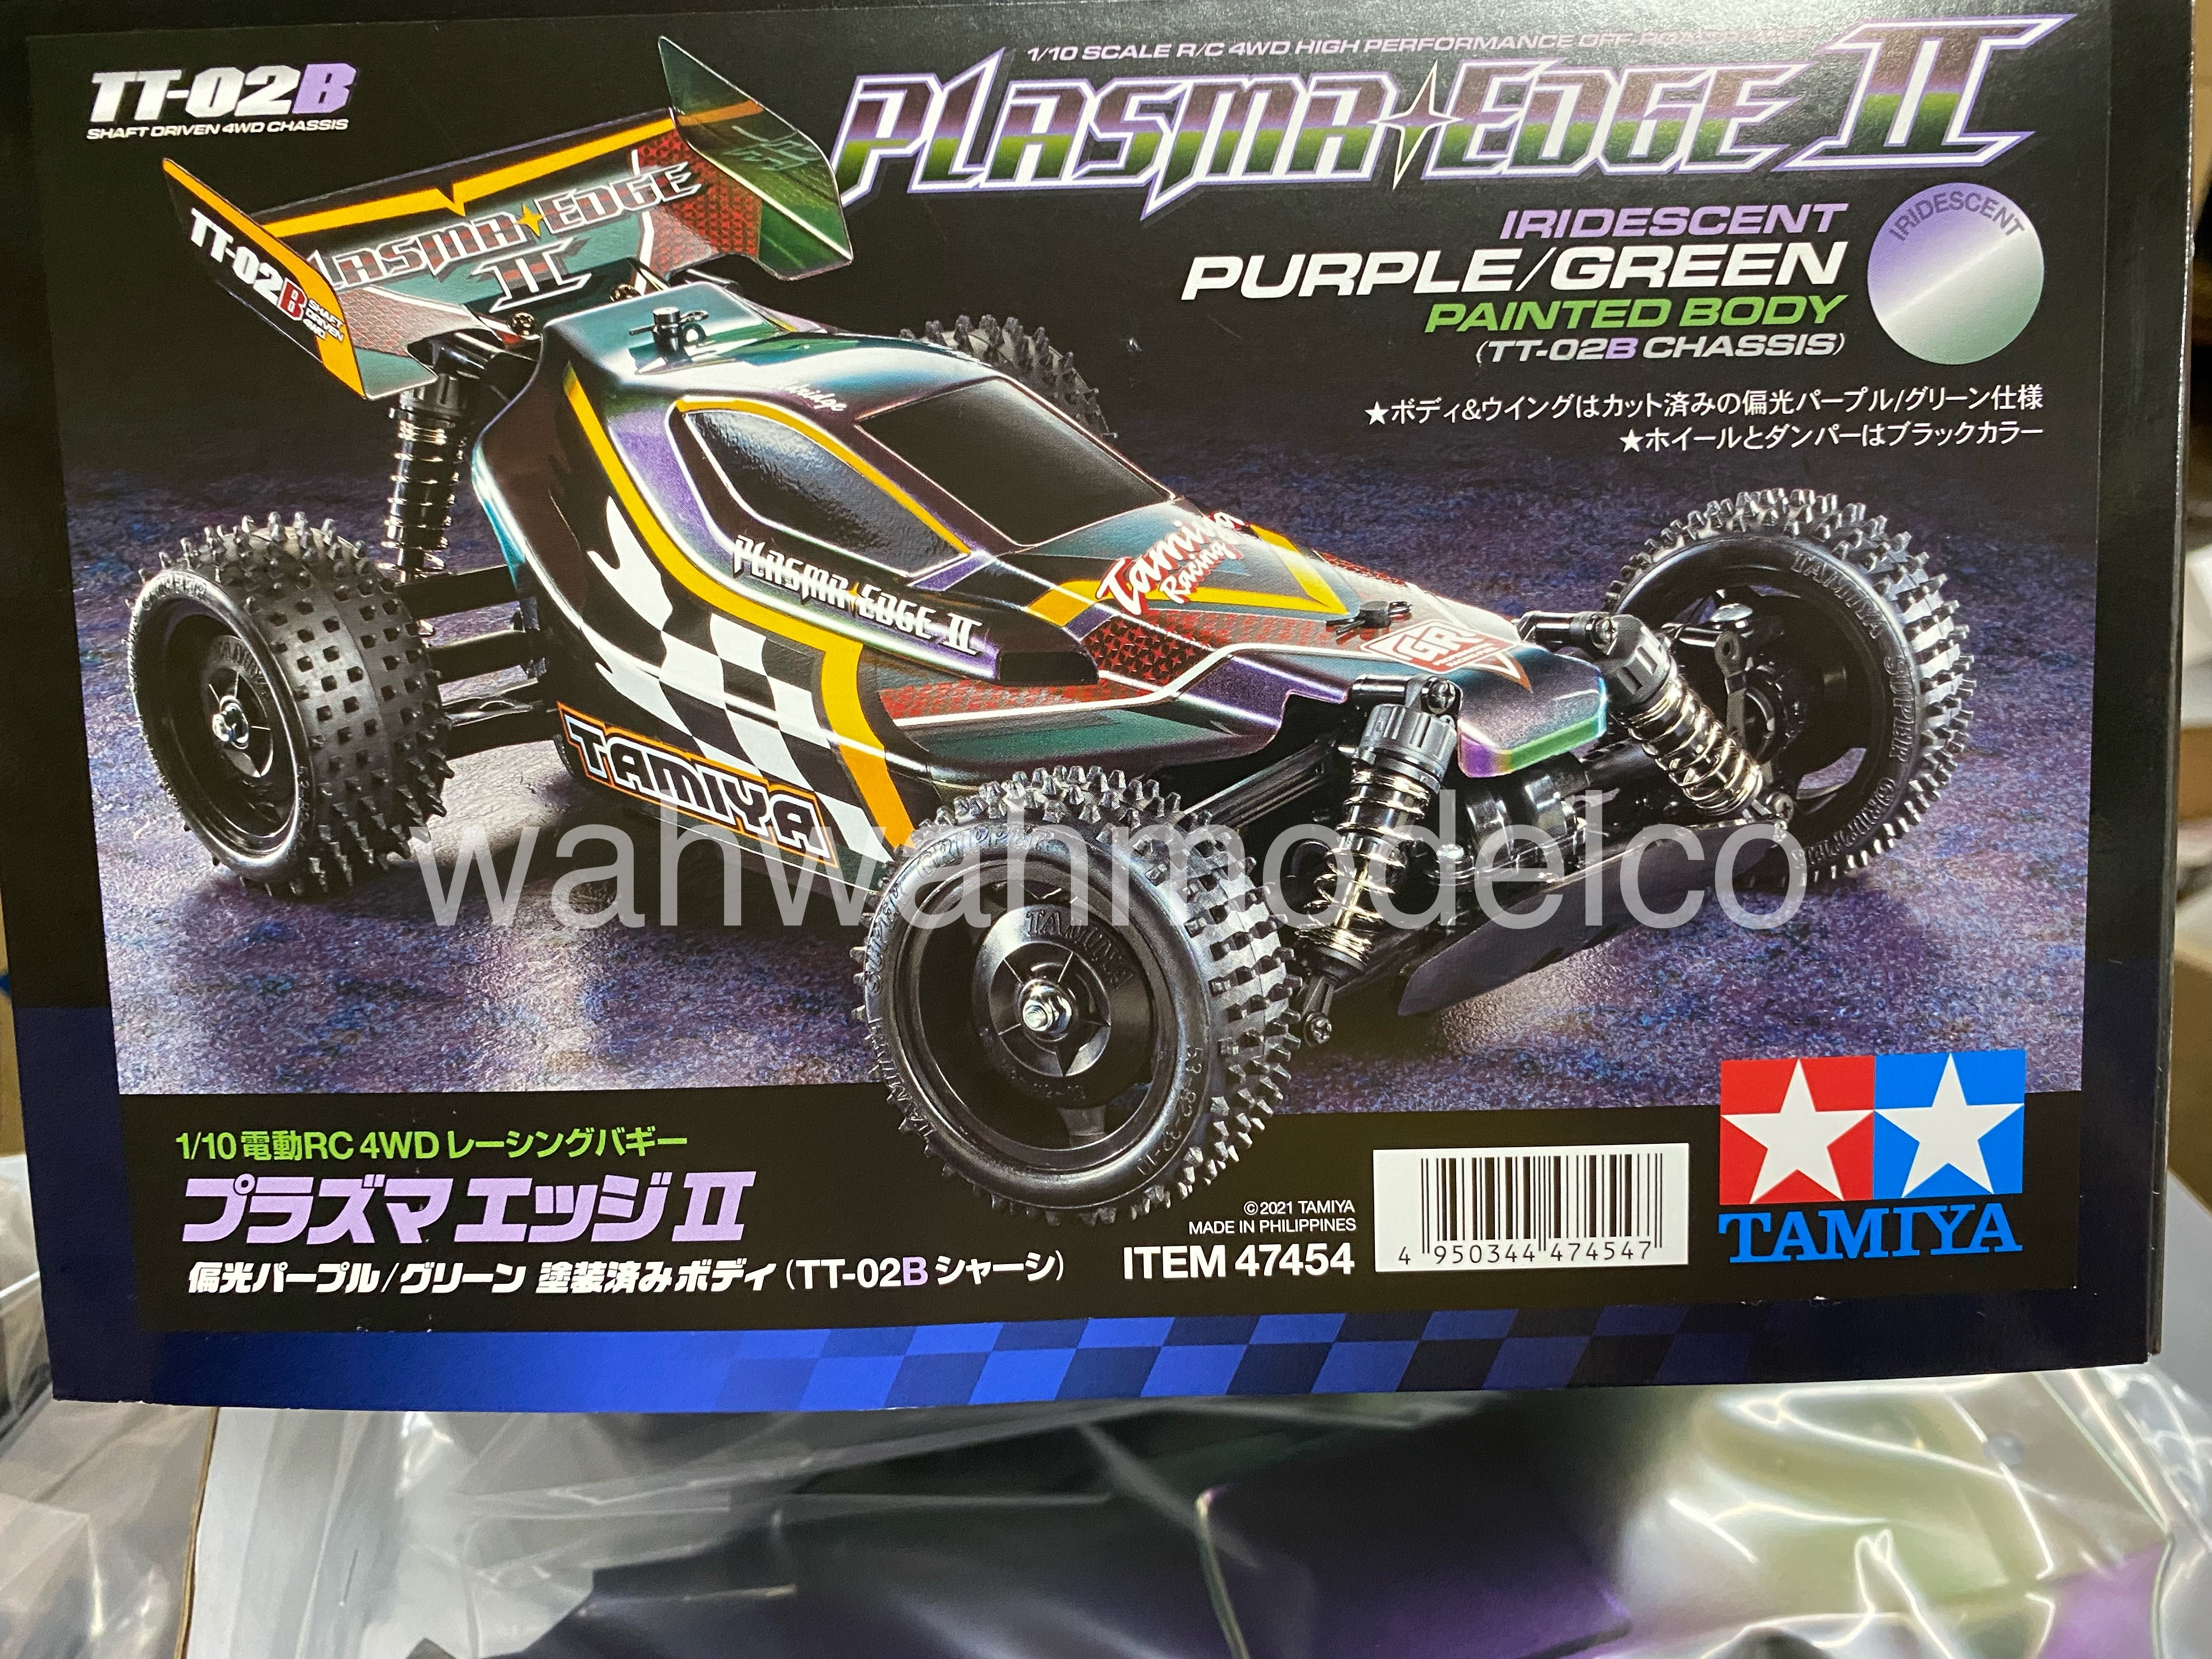 Tamiya 47454 1/10 RC Plasma Edge II TT-02B Iridescent Purple/Green Kit